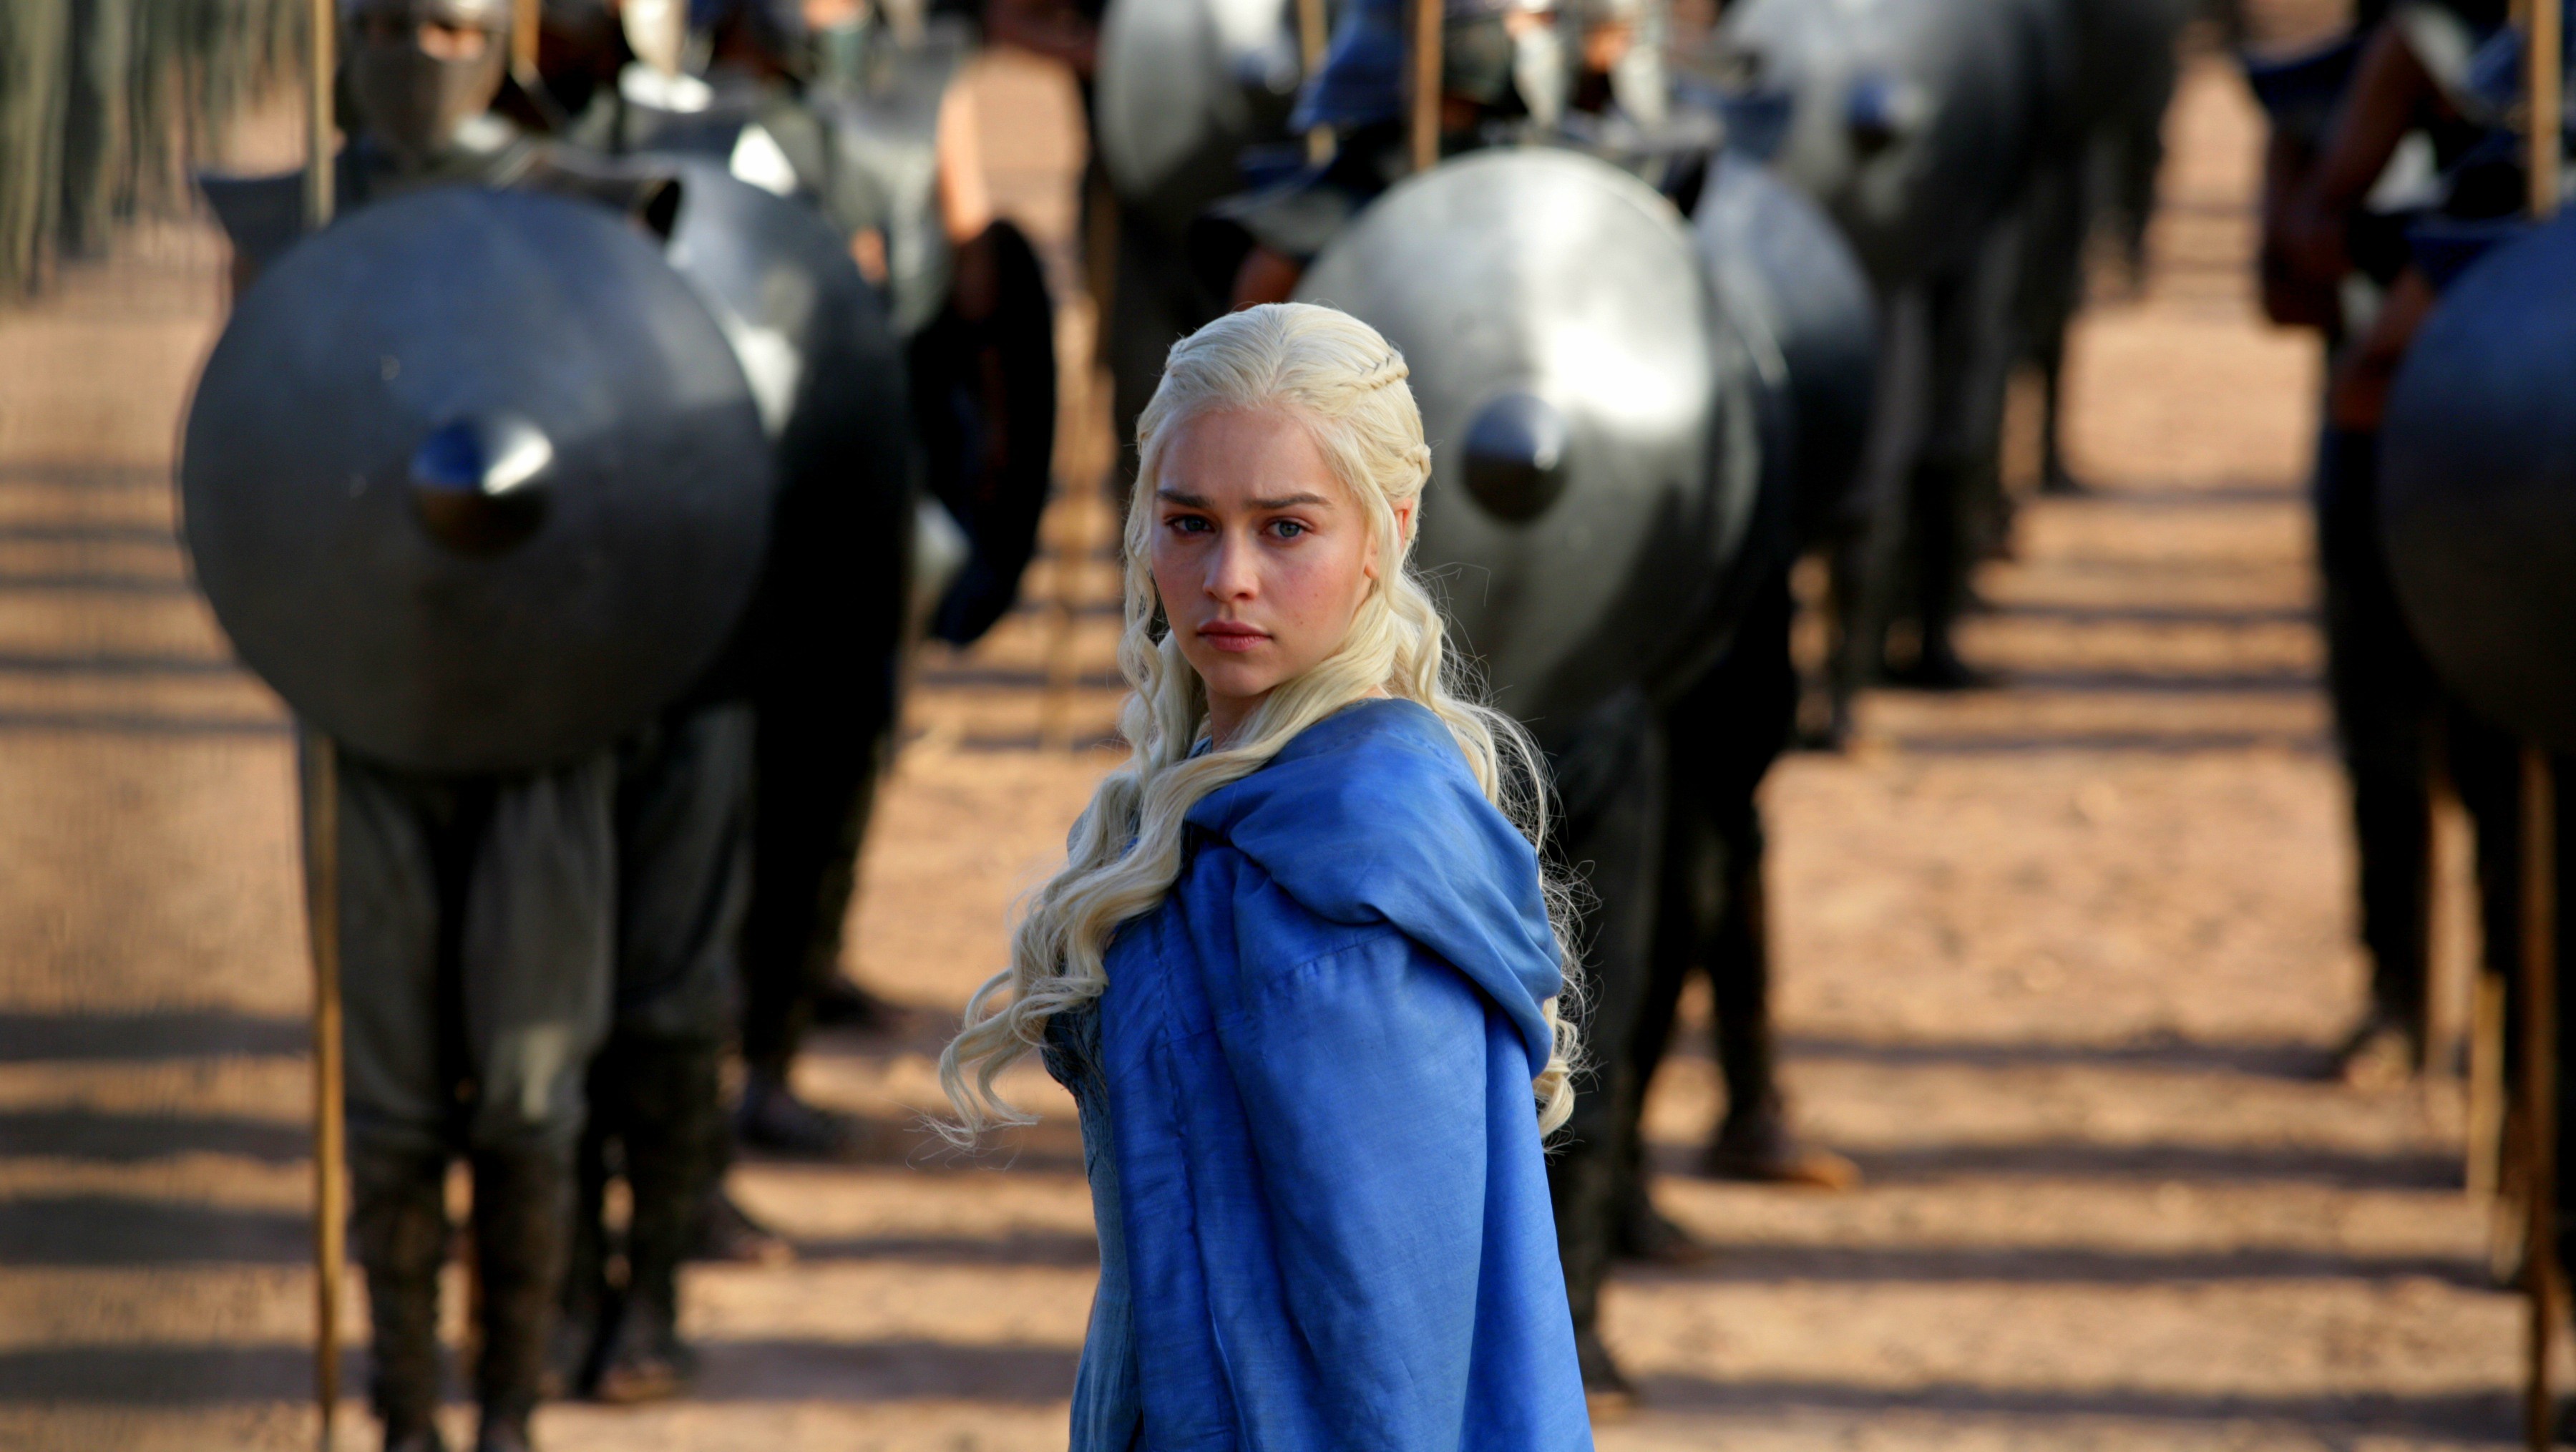 People 3600x2029 Daenerys Targaryen Game of Thrones blue clothing Emilia Clarke blue coat women fantasy girl blonde TV series celebrity actress